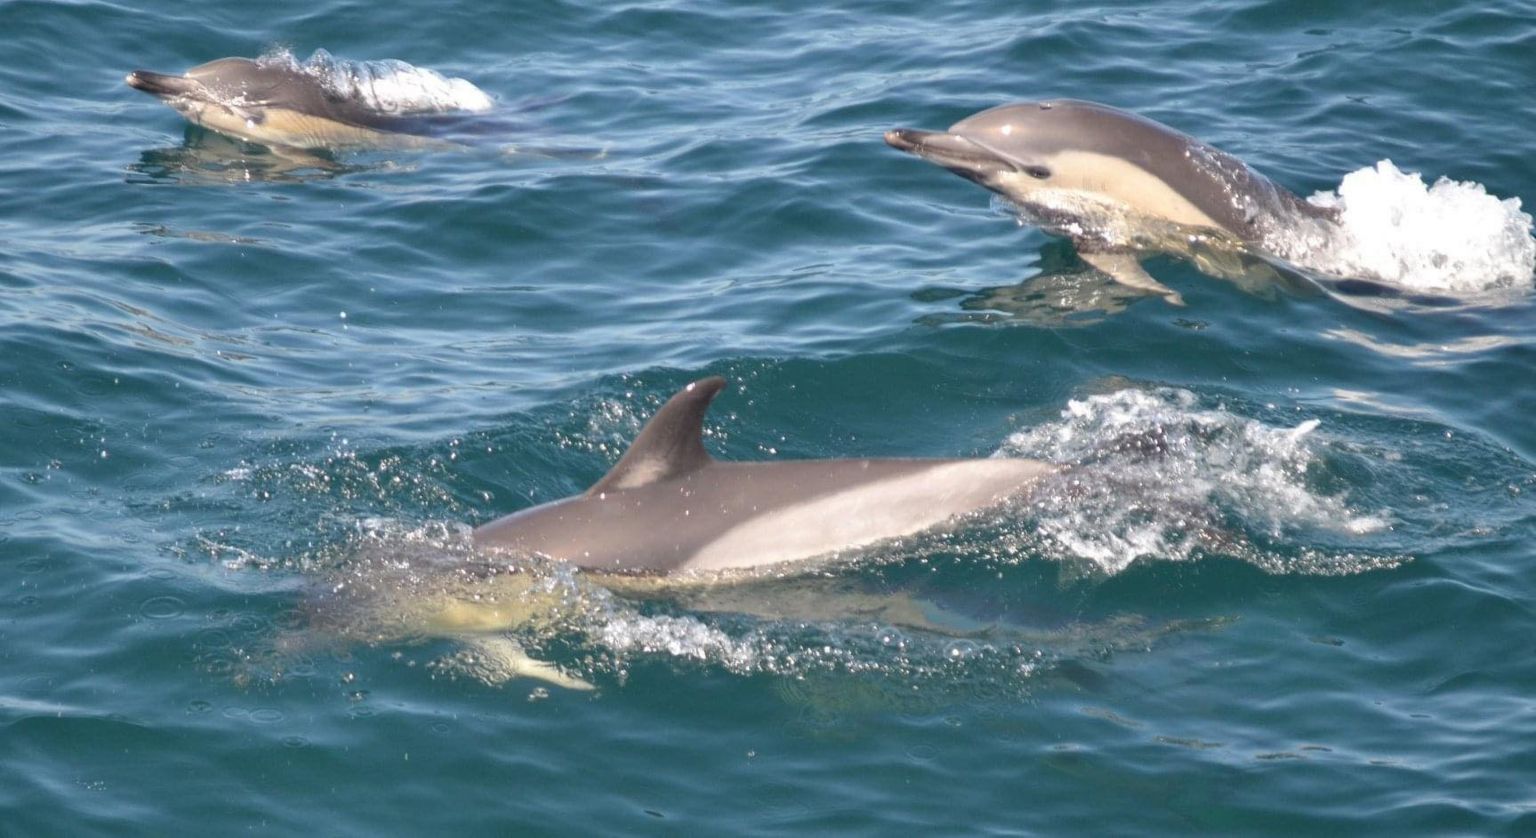 Sea-life reports sought by Cumbrian marine mammal rescuer